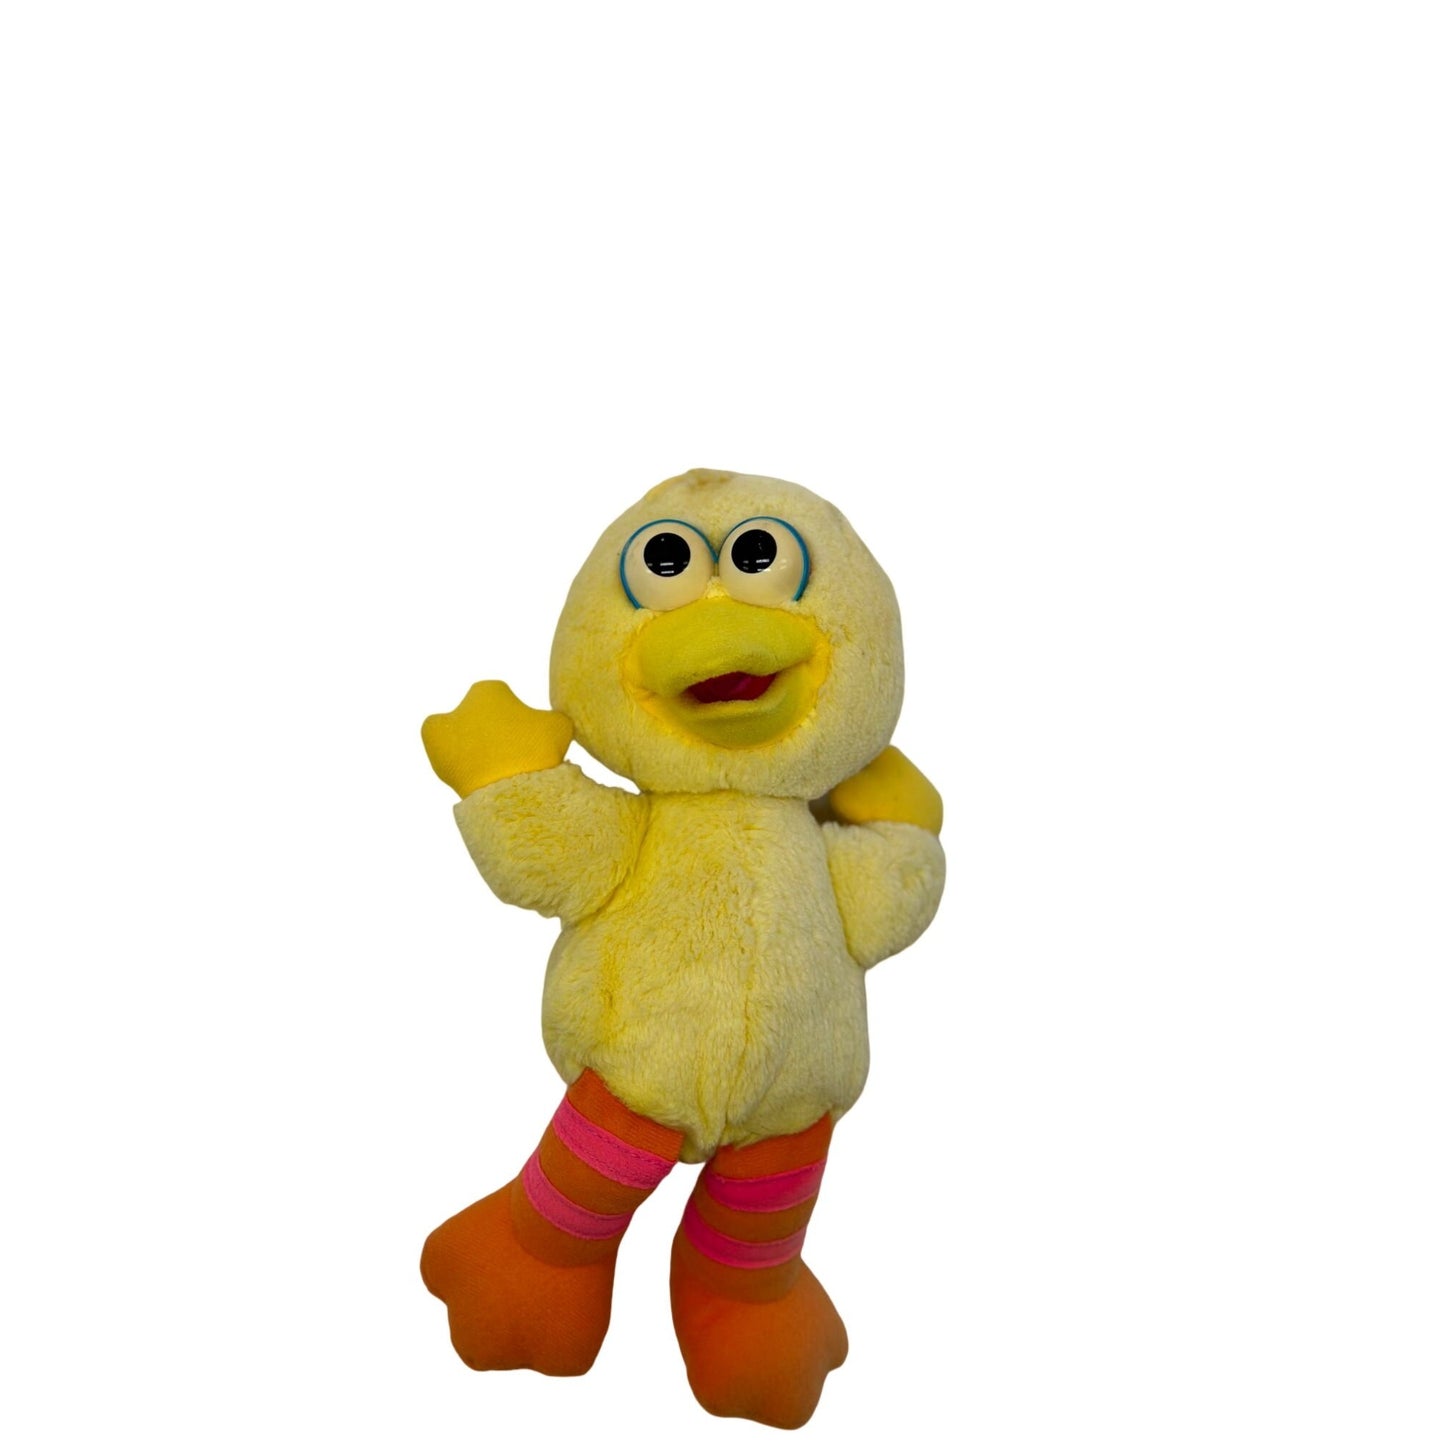 Vintage Tyco 1996 Big Bird Jim Henson Preschool Plush Stuffed Animal Toy 11”